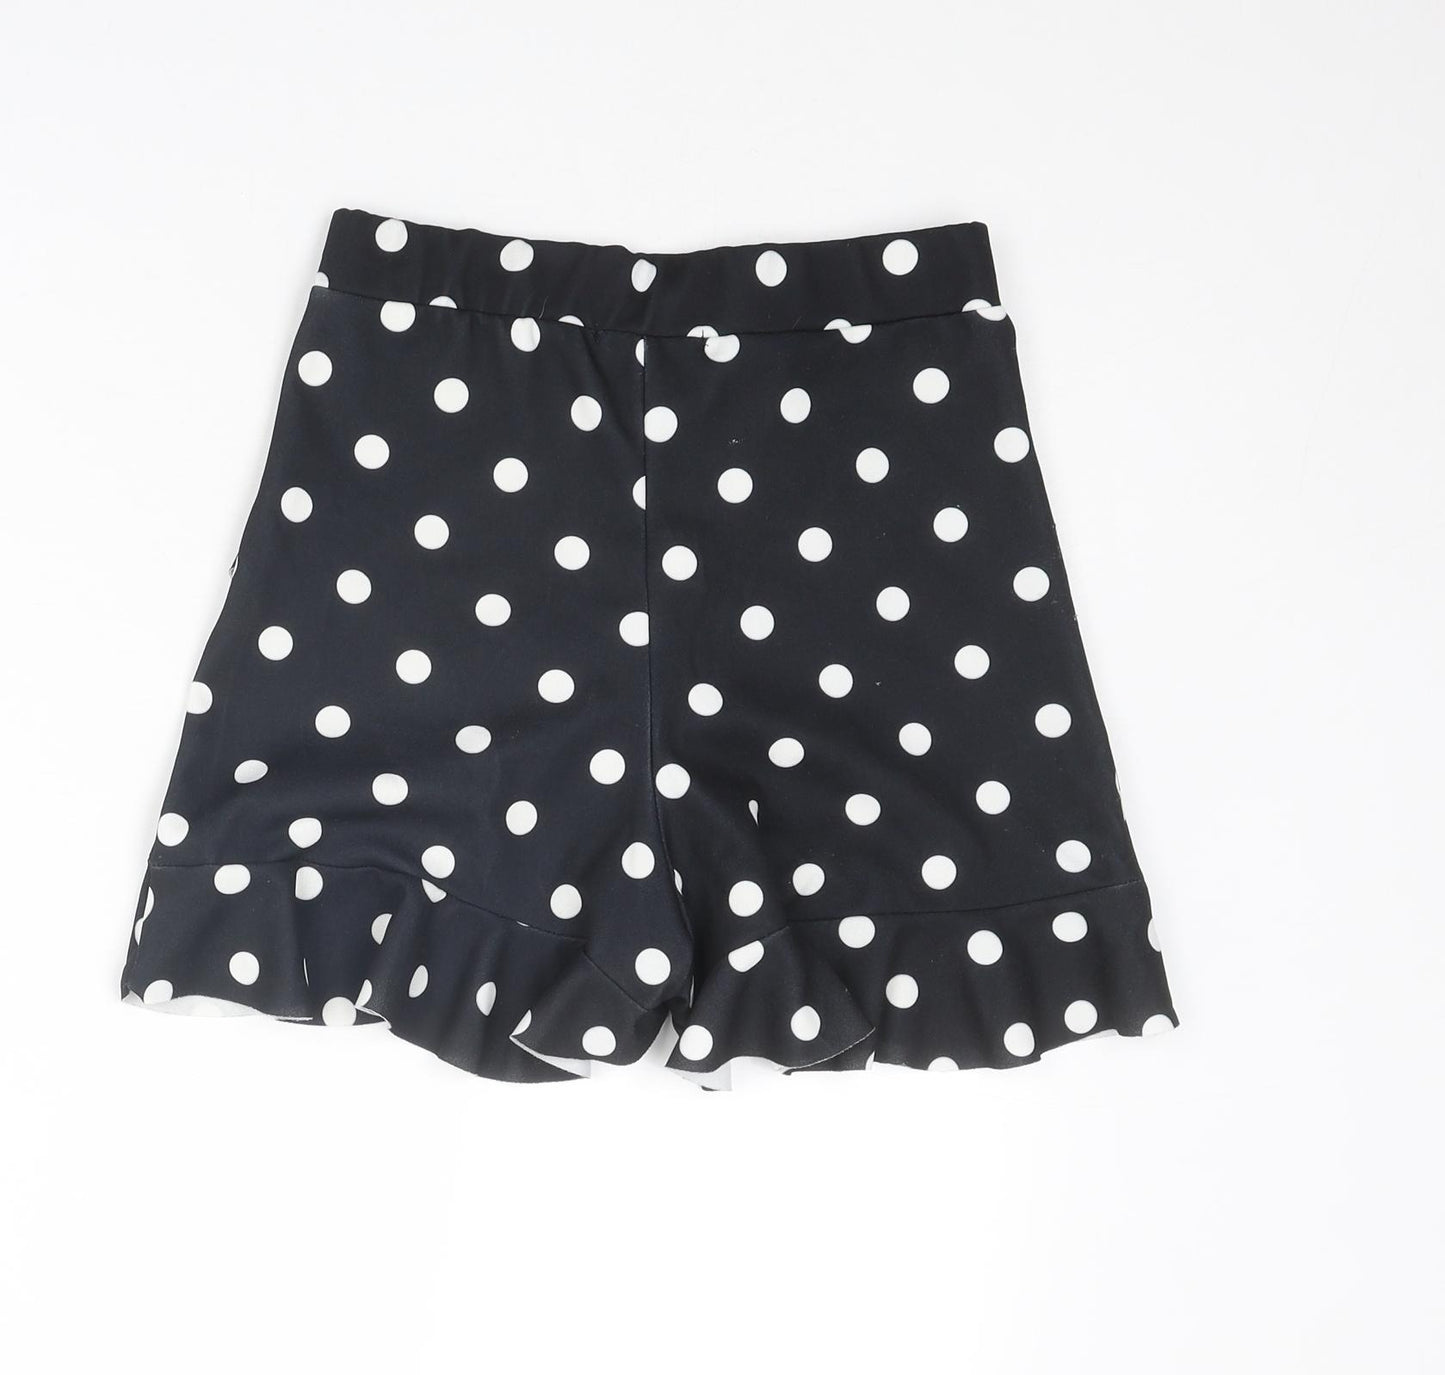 New Look Womens Black Polka Dot Polyester Basic Shorts Size 8 L3 in Regular Pull On - Skort